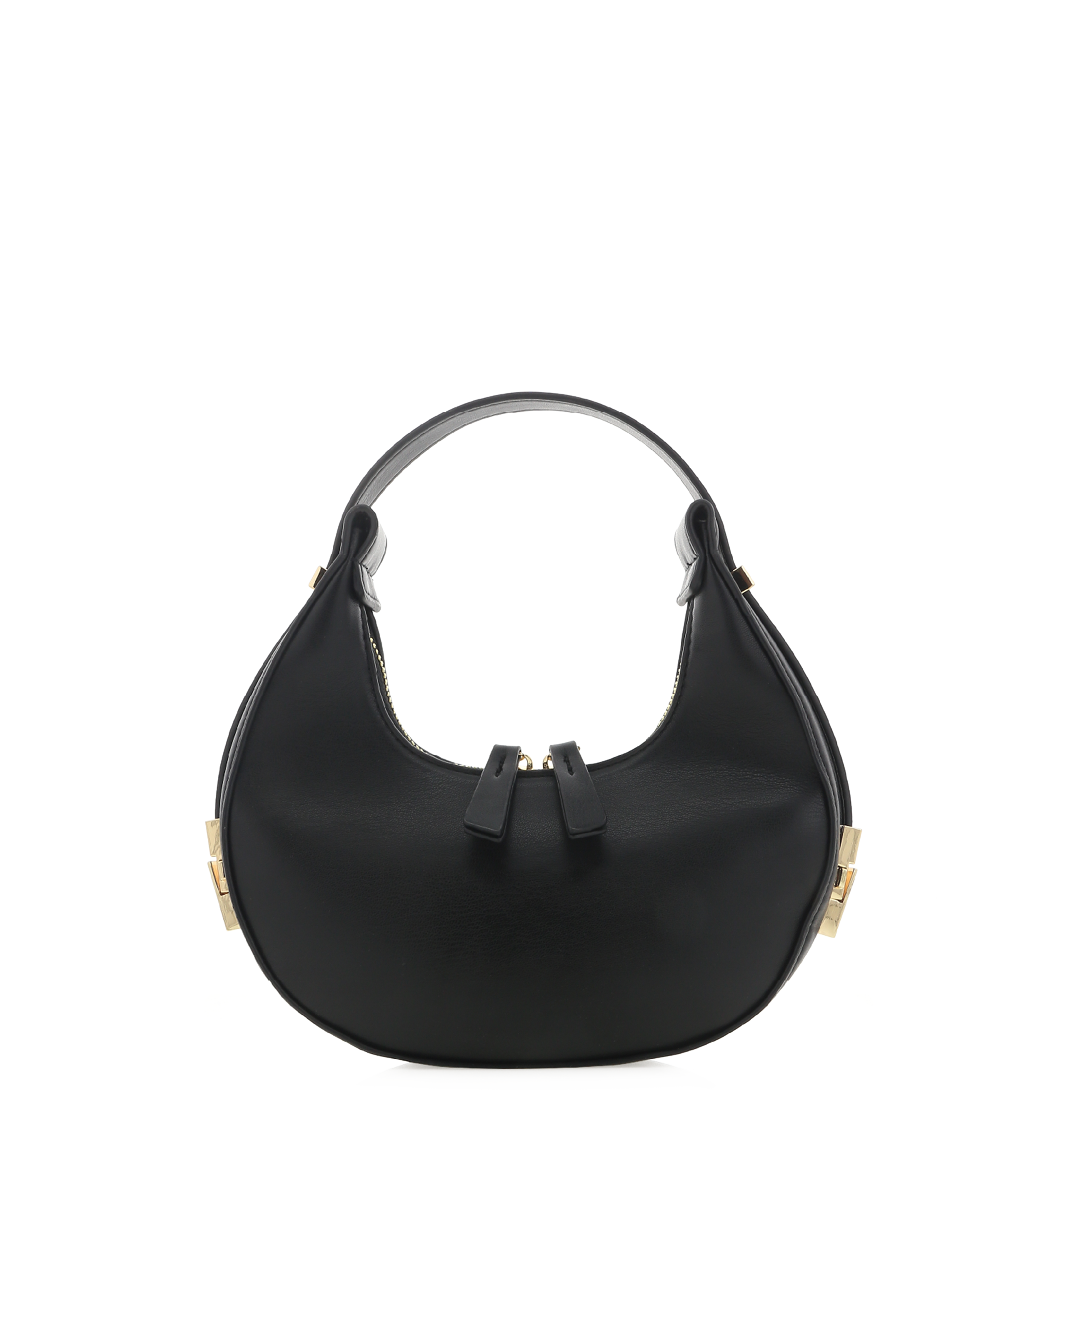 SOFIA SHOULDER BAG - BLACK-Handbags-Billini-O/S-Billini